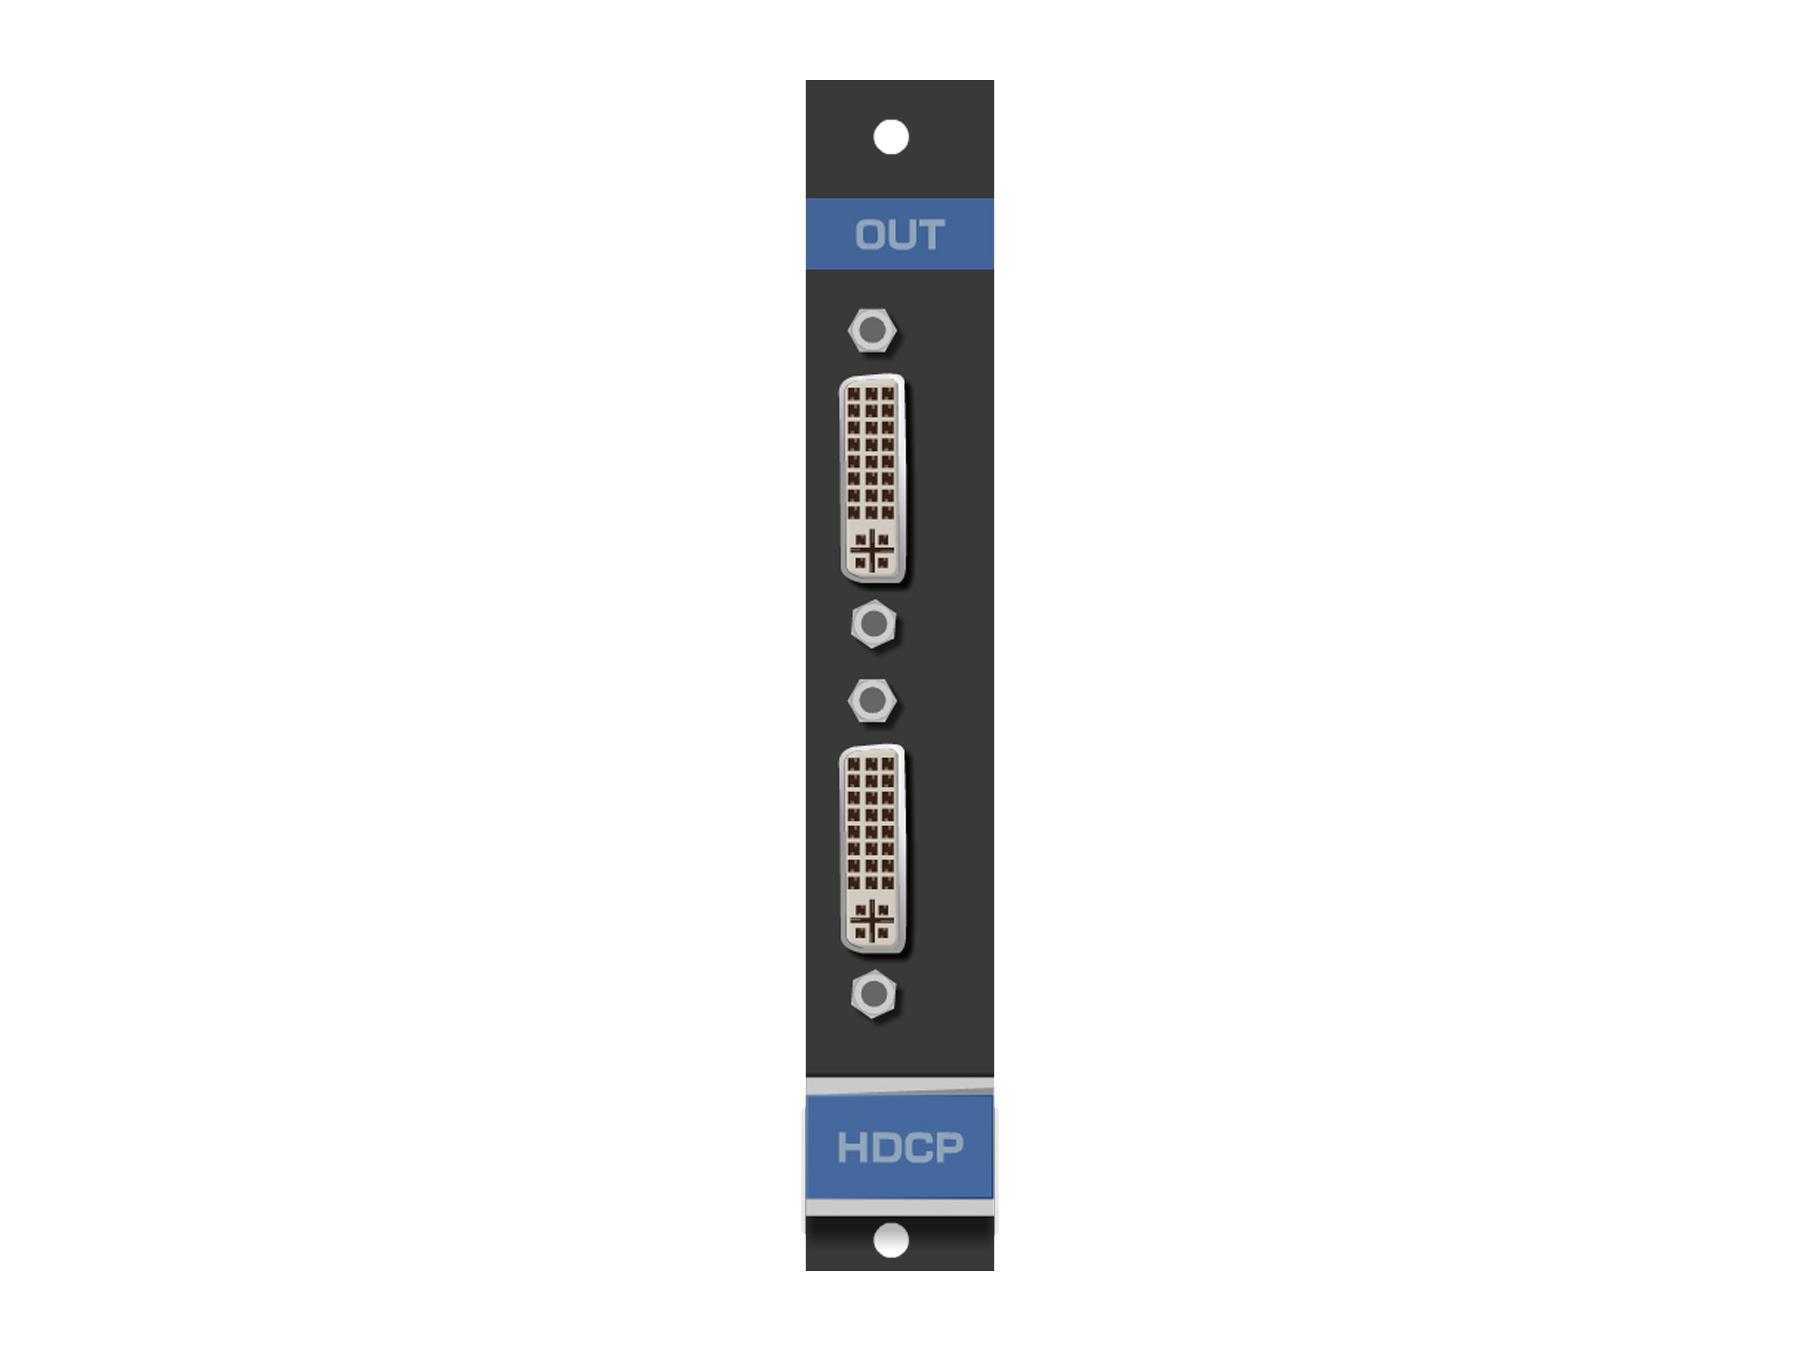 Kramer HDCP-OUT2-F16 2 Output DVI (HDCP) Module - For VS-1616D